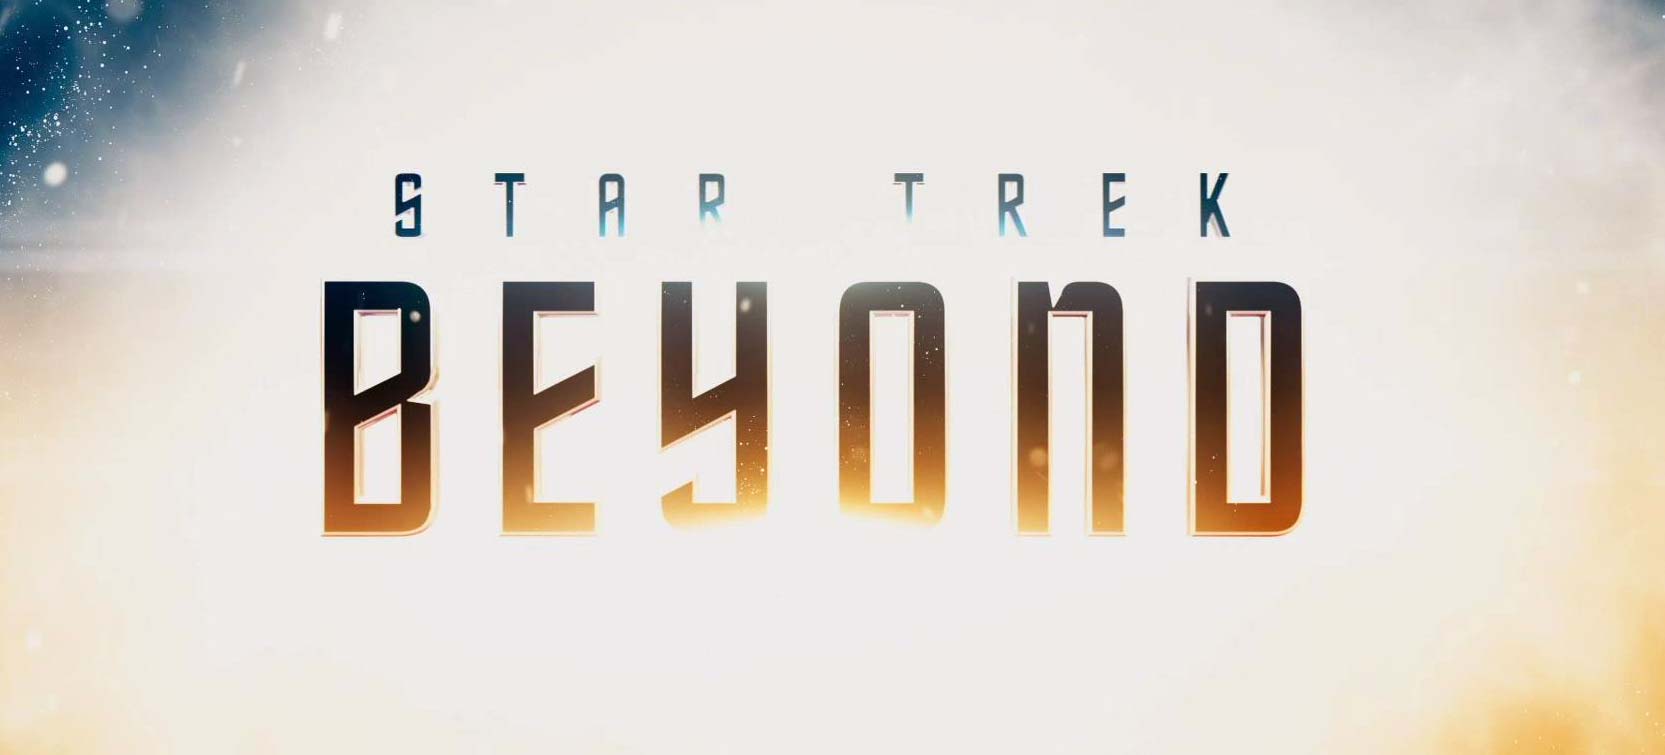 Star Trek Beyond - Trailer 2 italiano